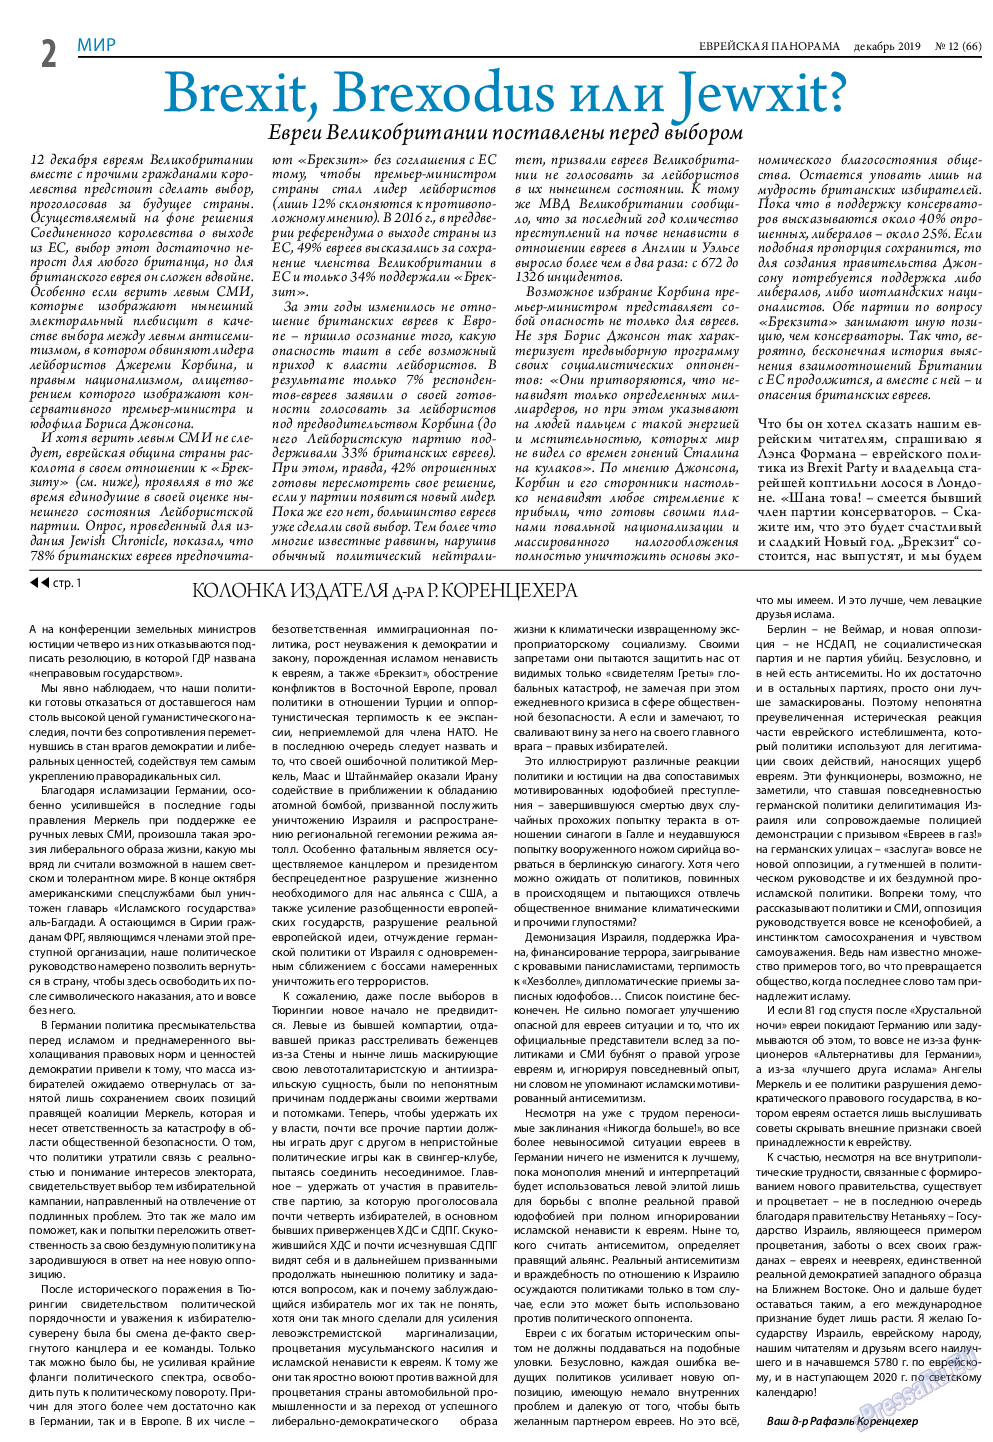 Еврейская панорама, газета. 2019 №12 стр.2